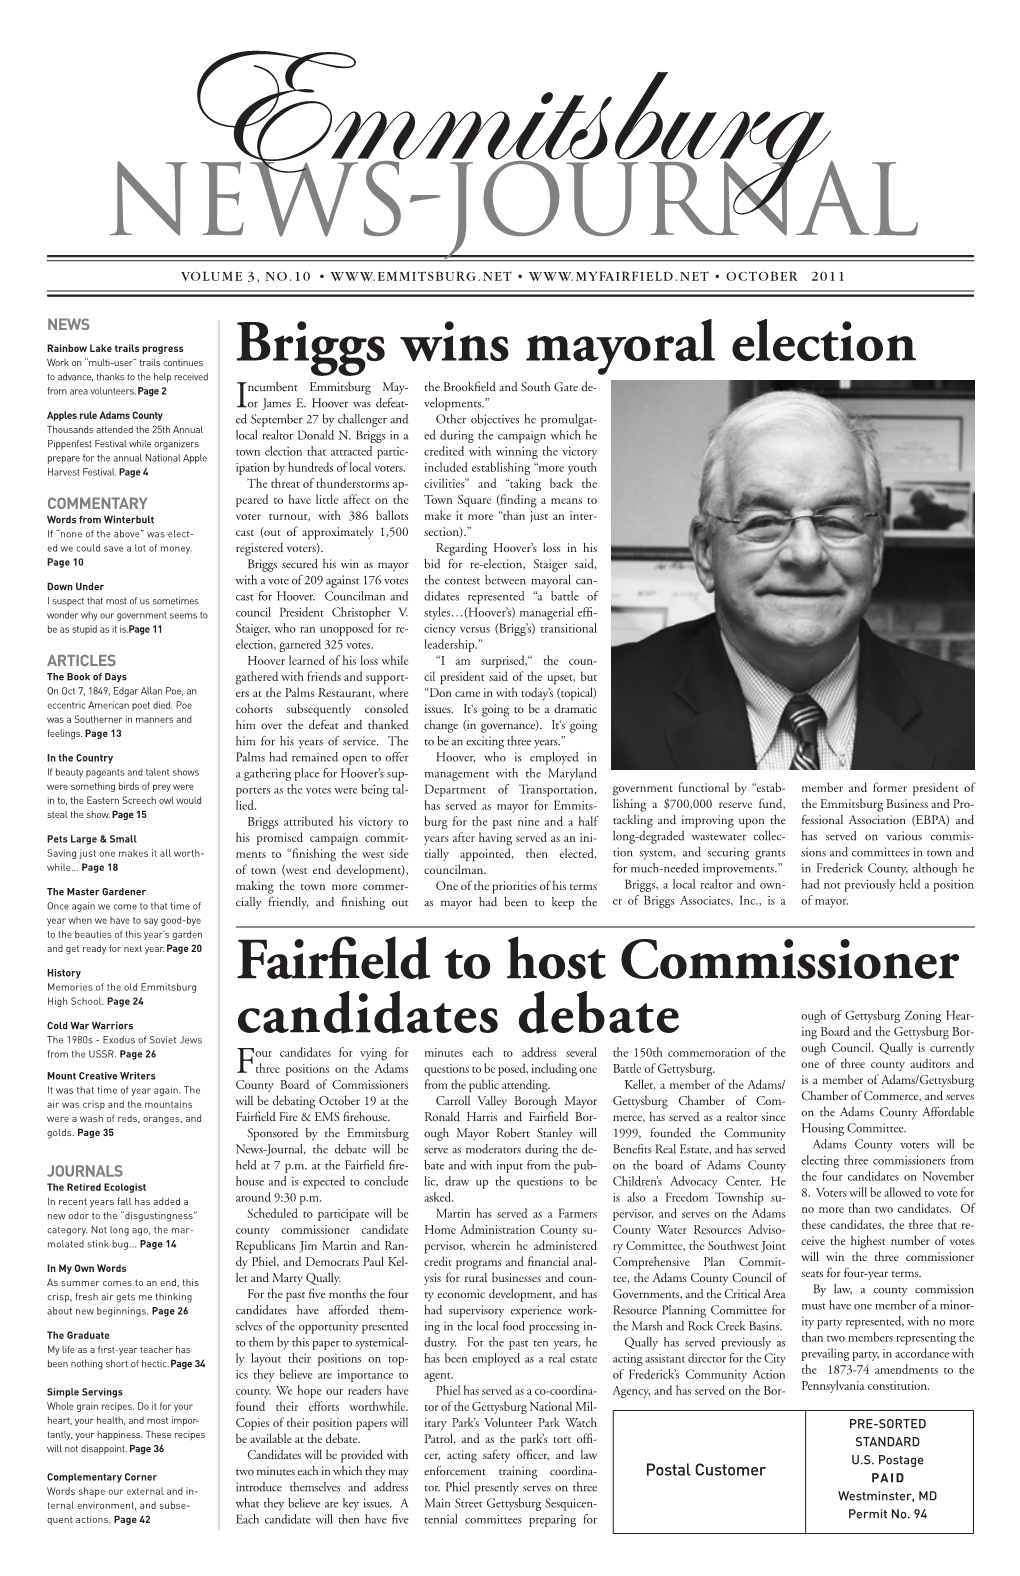 Fairfield to Host Commissioner Candidates Debate Briggs Wins